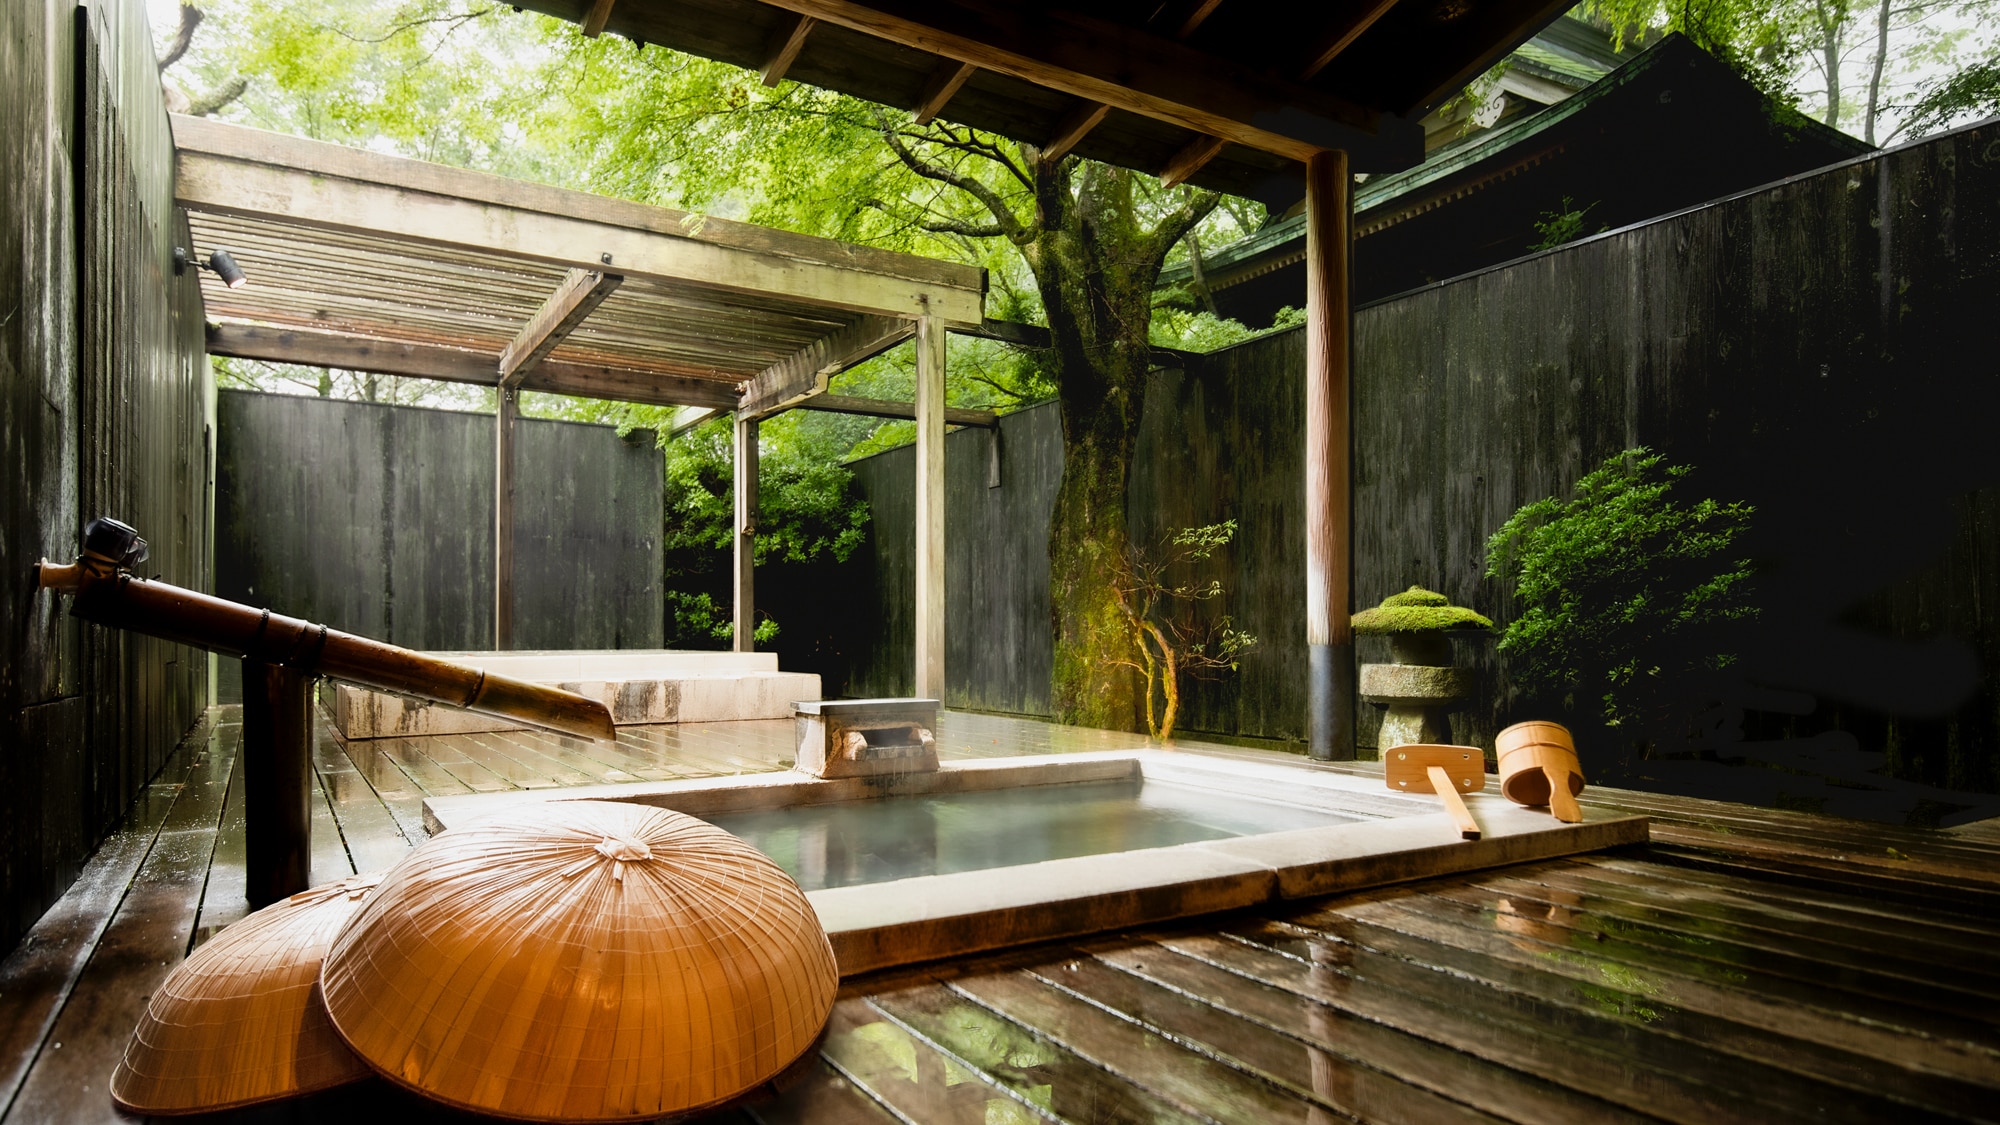 Yamaboshi open-air bath footbath